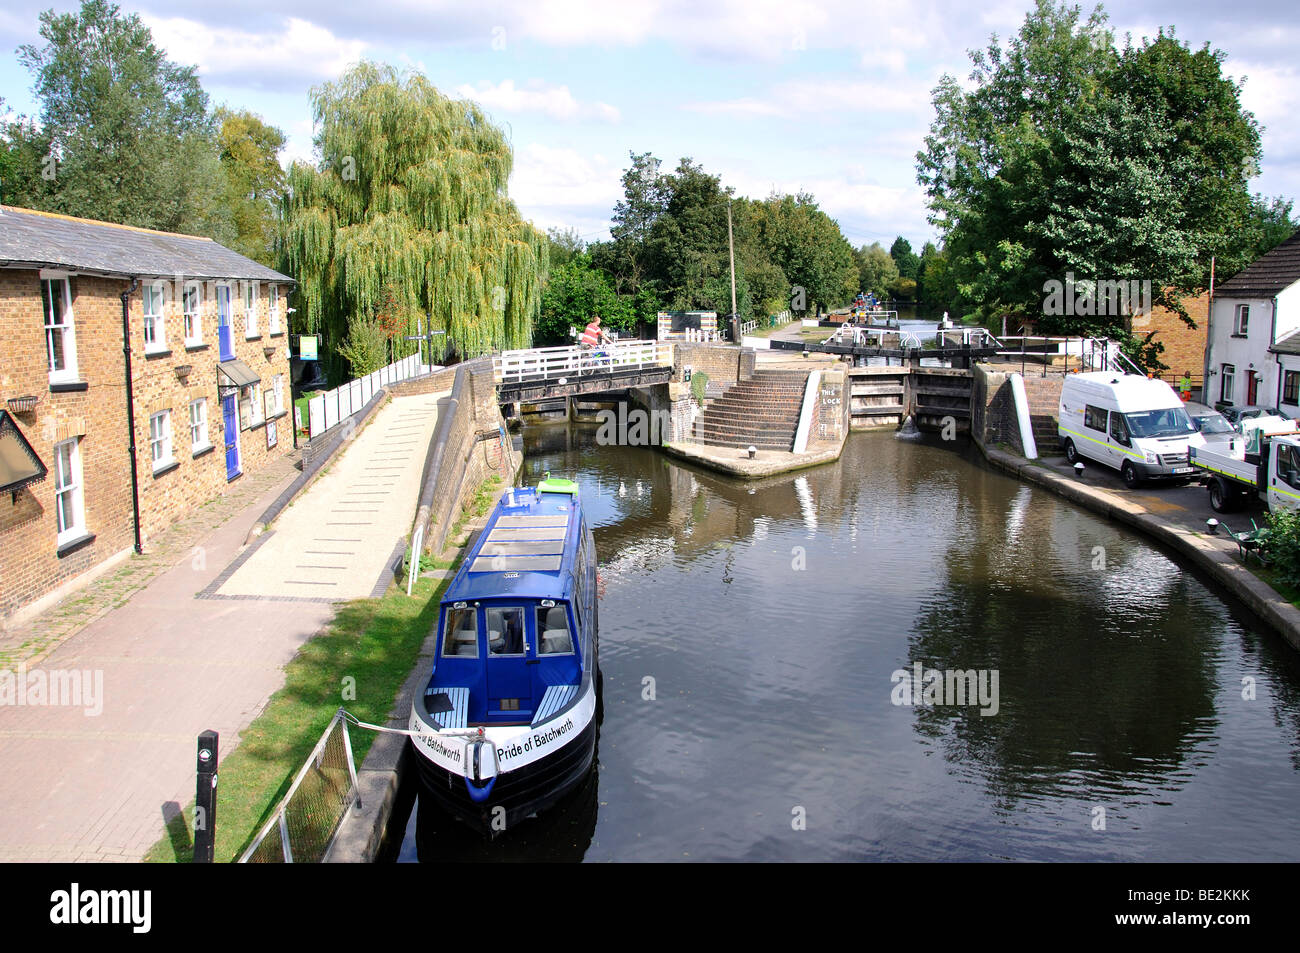 Batchworth Lock, Grand Union Canal, Rickmansworth, Hertfordshire, England, United Kingdom Stock Photo